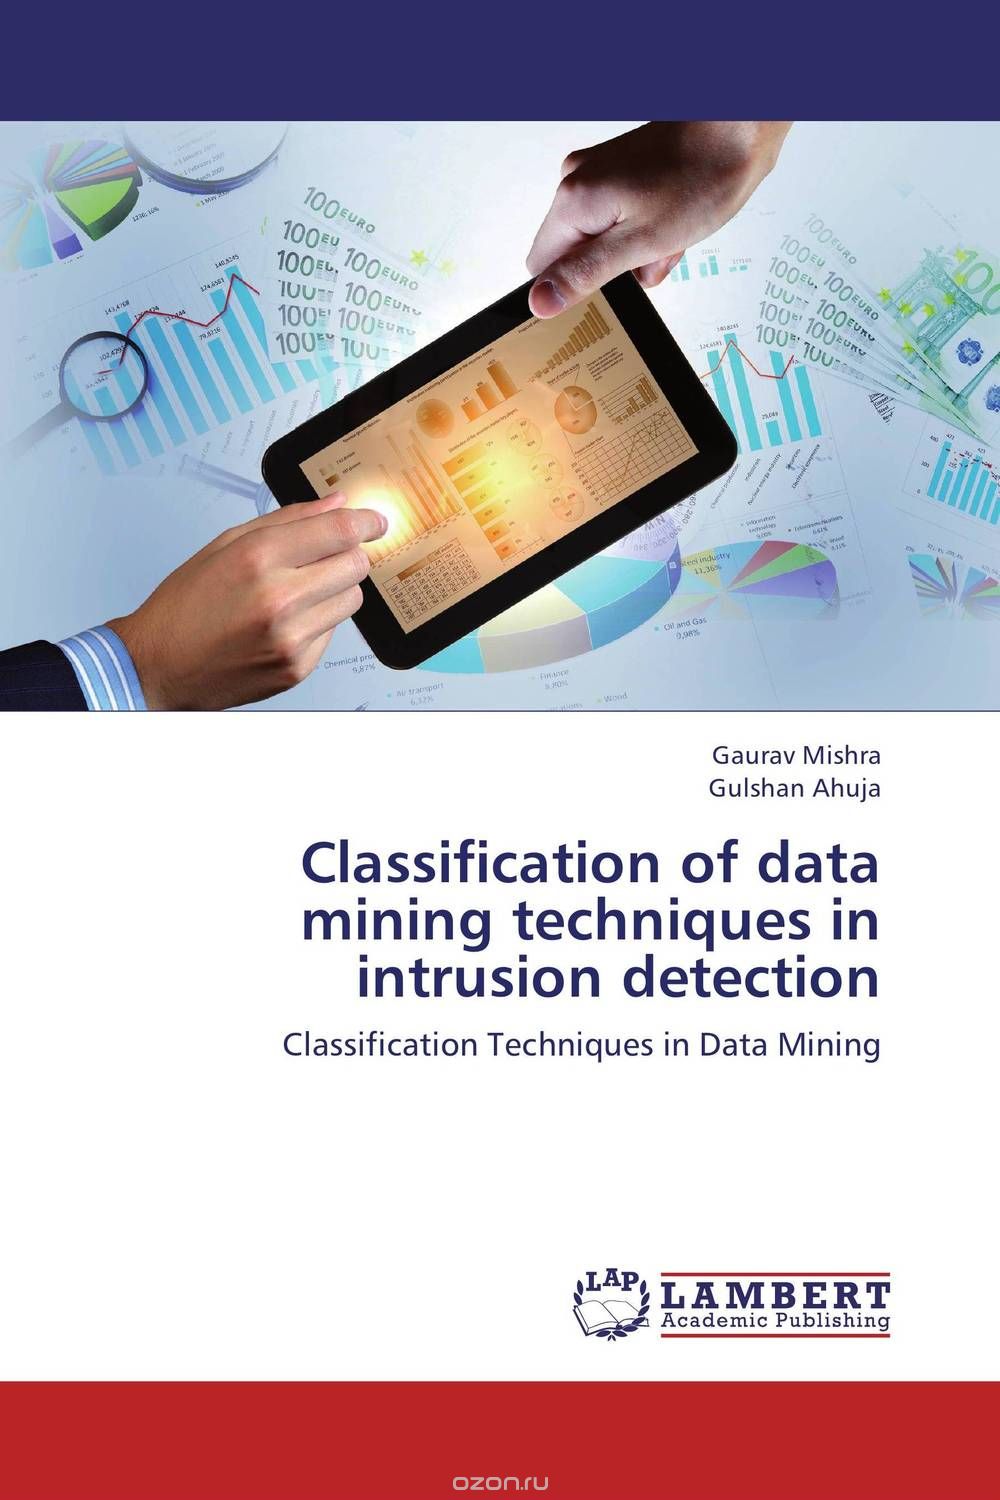 Скачать книгу "Classification of data mining techniques in intrusion detection"